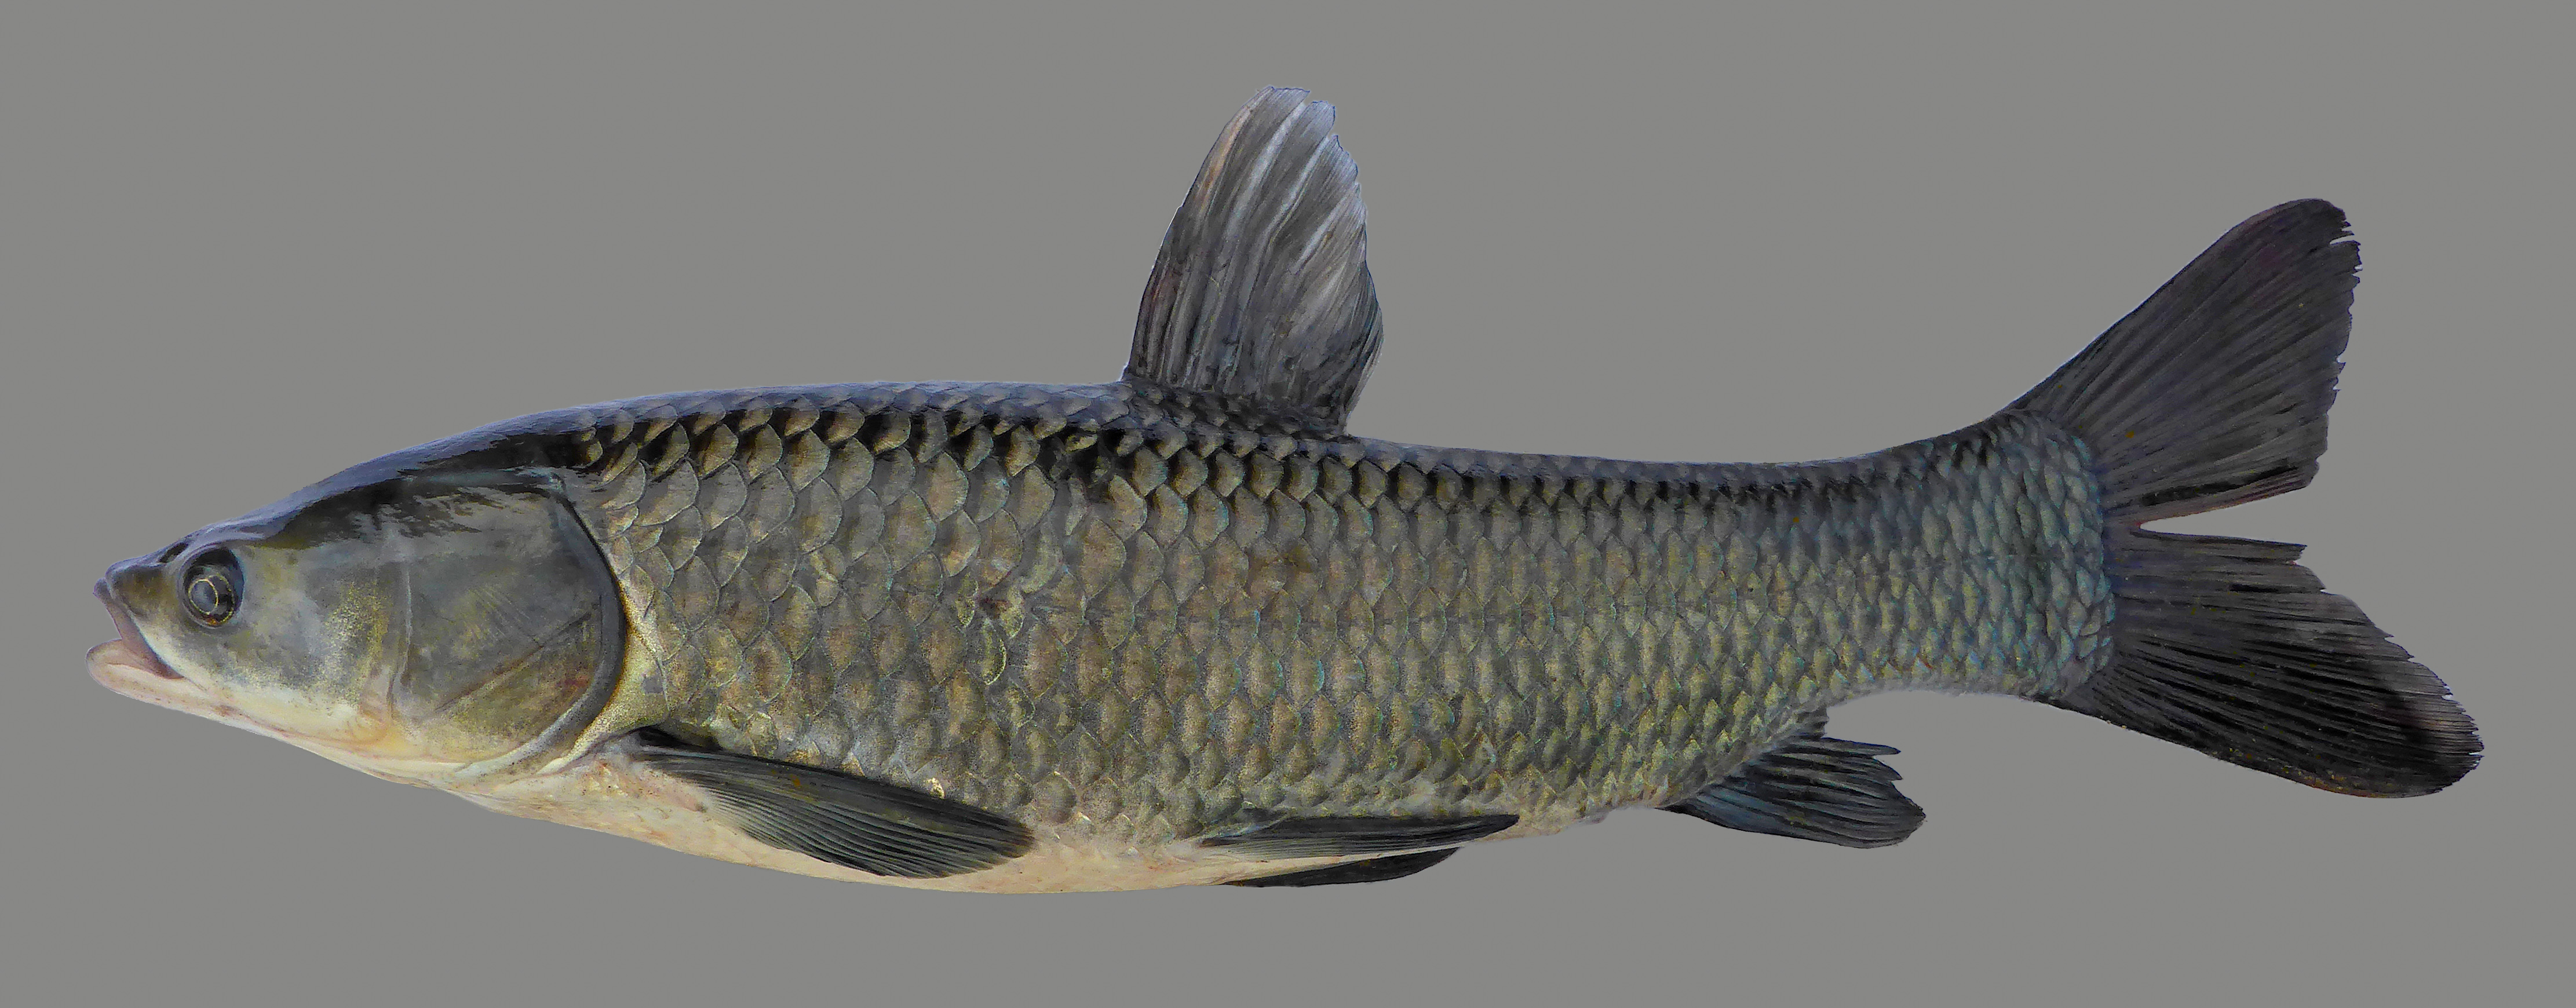 Black Carp - Kentucky Department of Fish & Wildlife